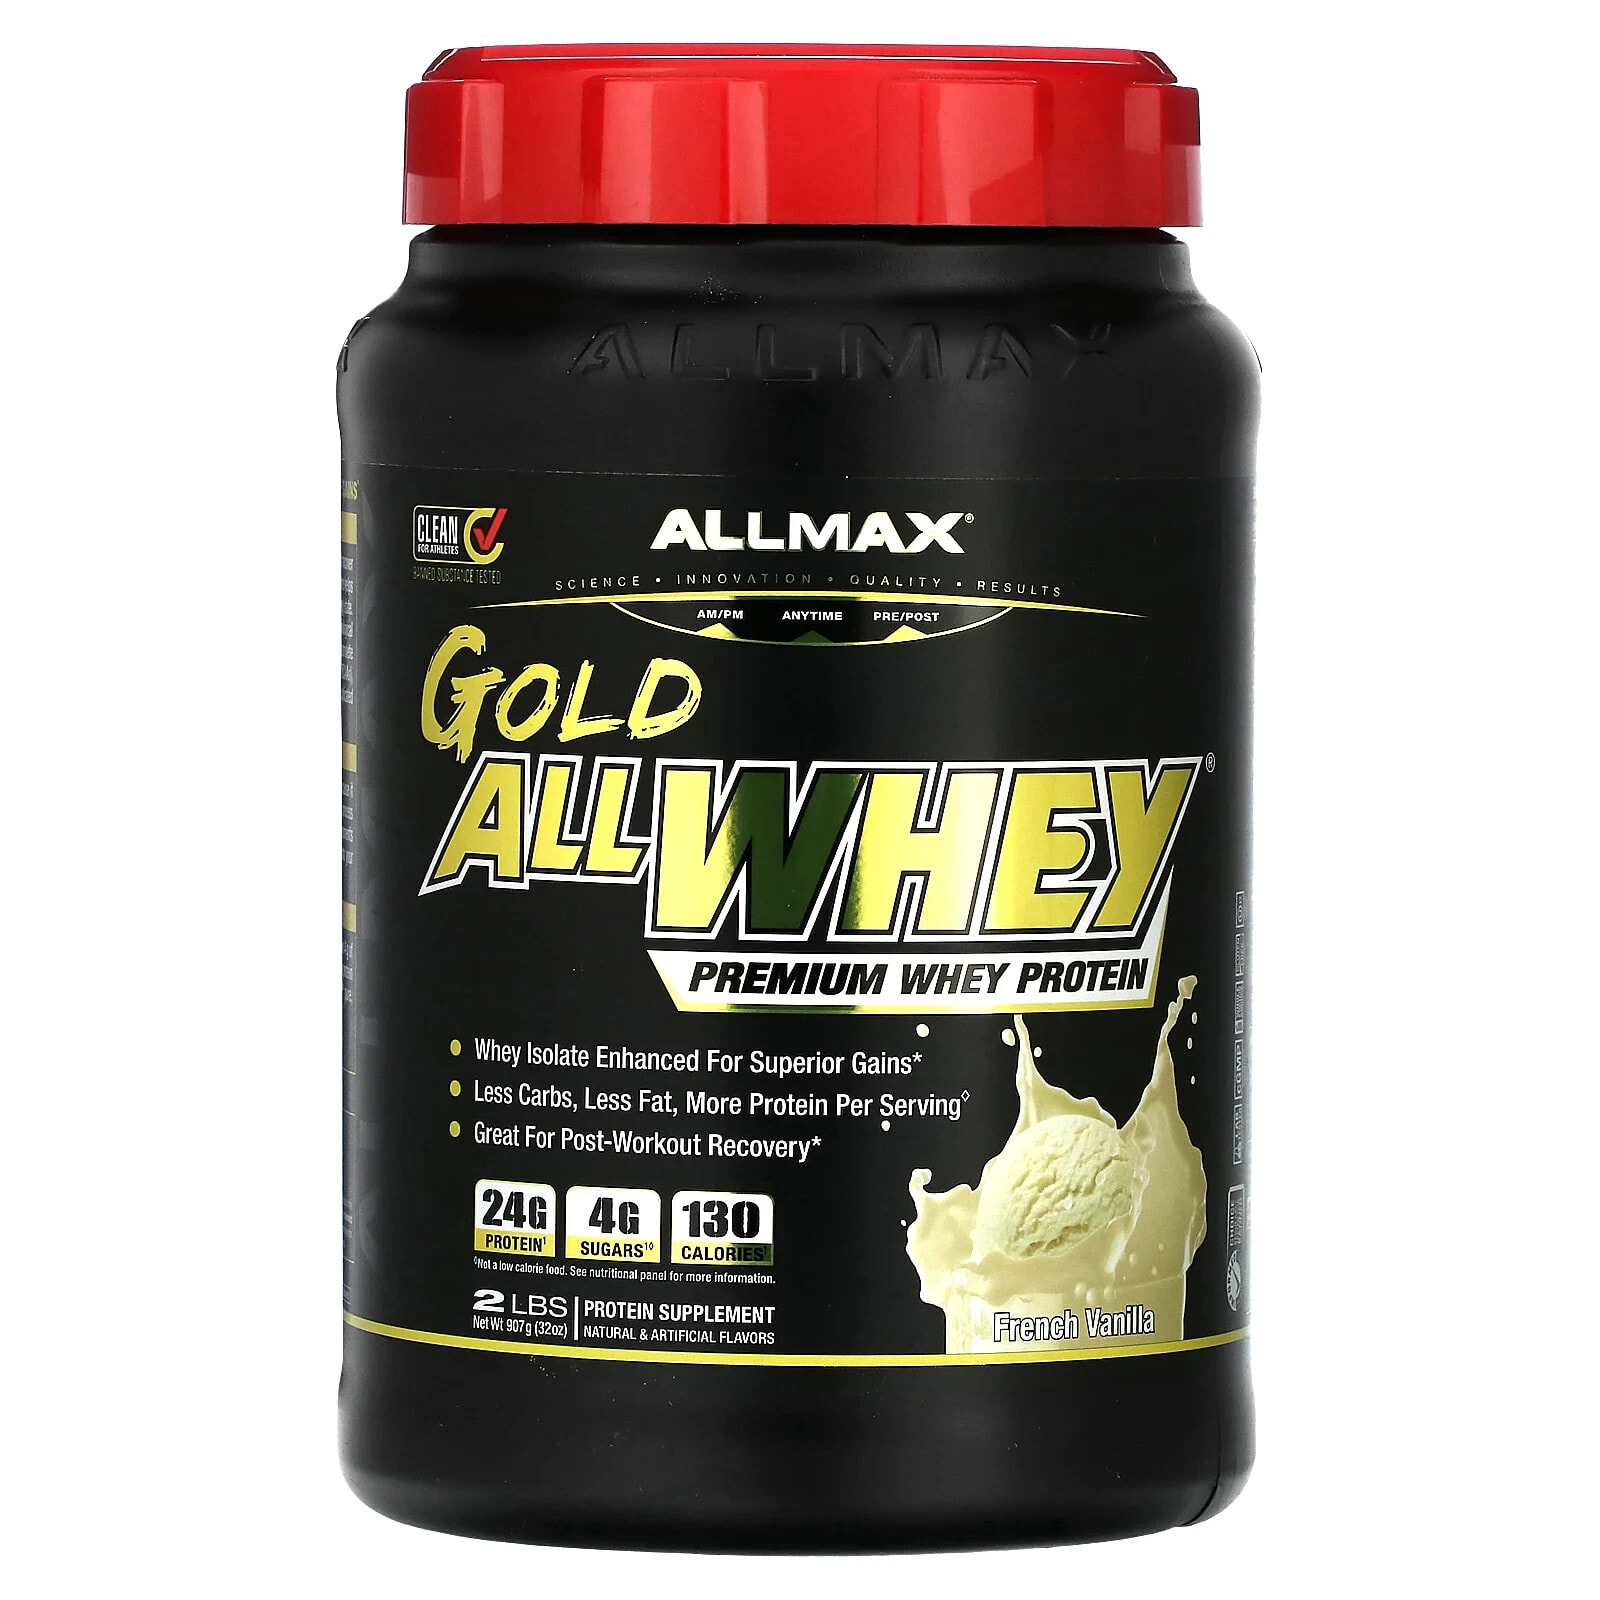 Gold AllWhey, Premium Whey Protein, French Vanilla, 5 lbs (2.27 kg)